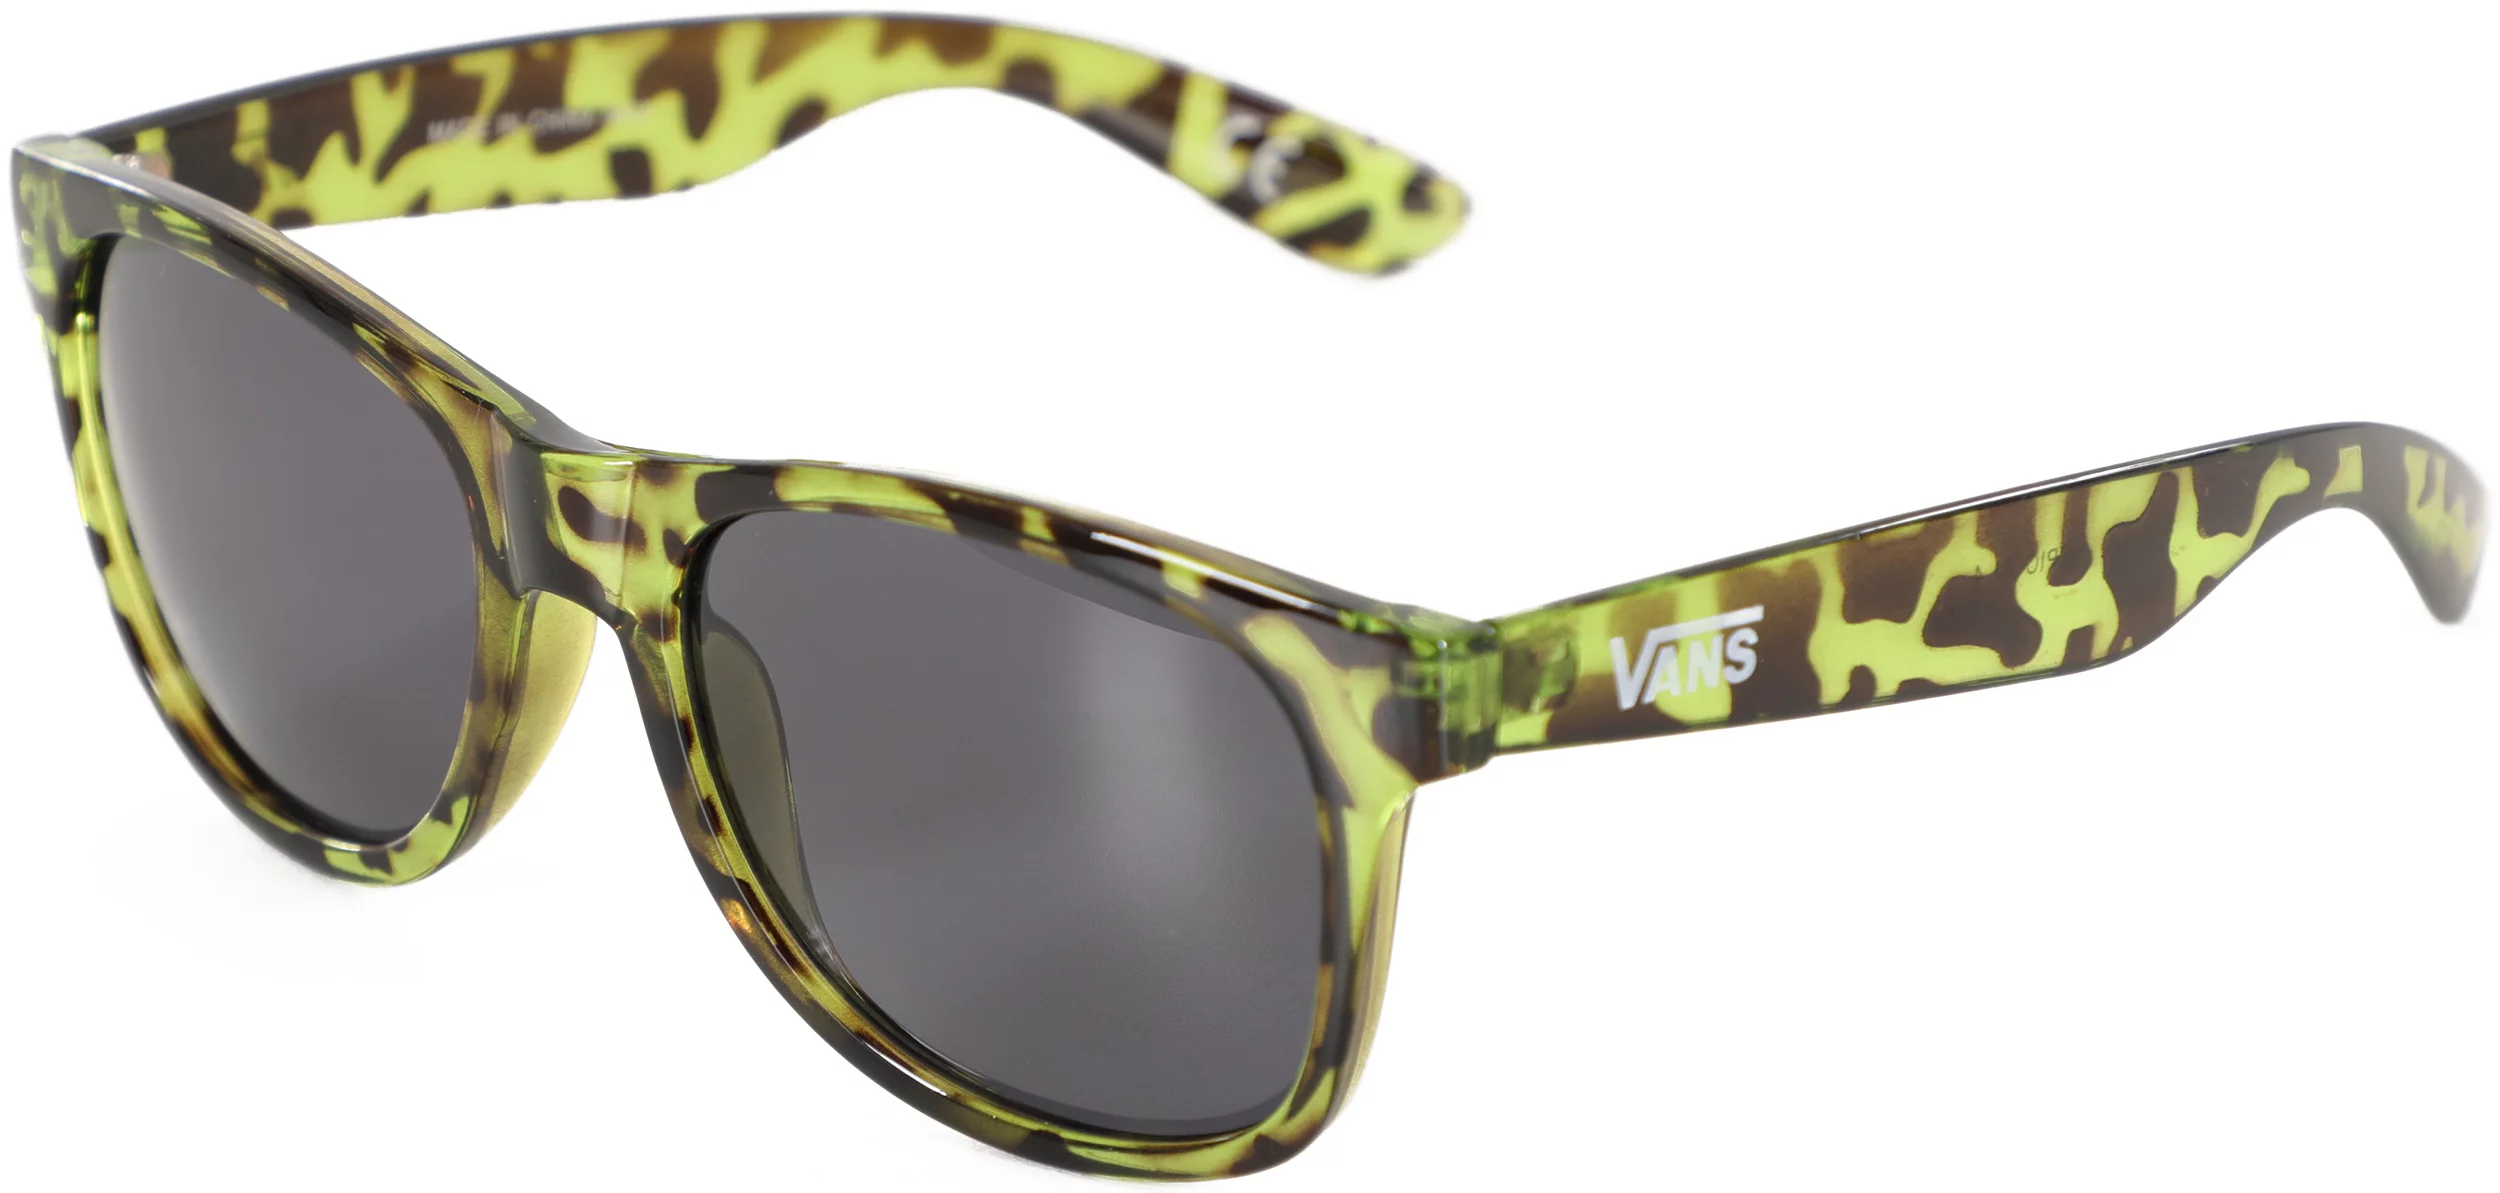 Vans Spicoli 4 Shades Sunglasses - lime green |